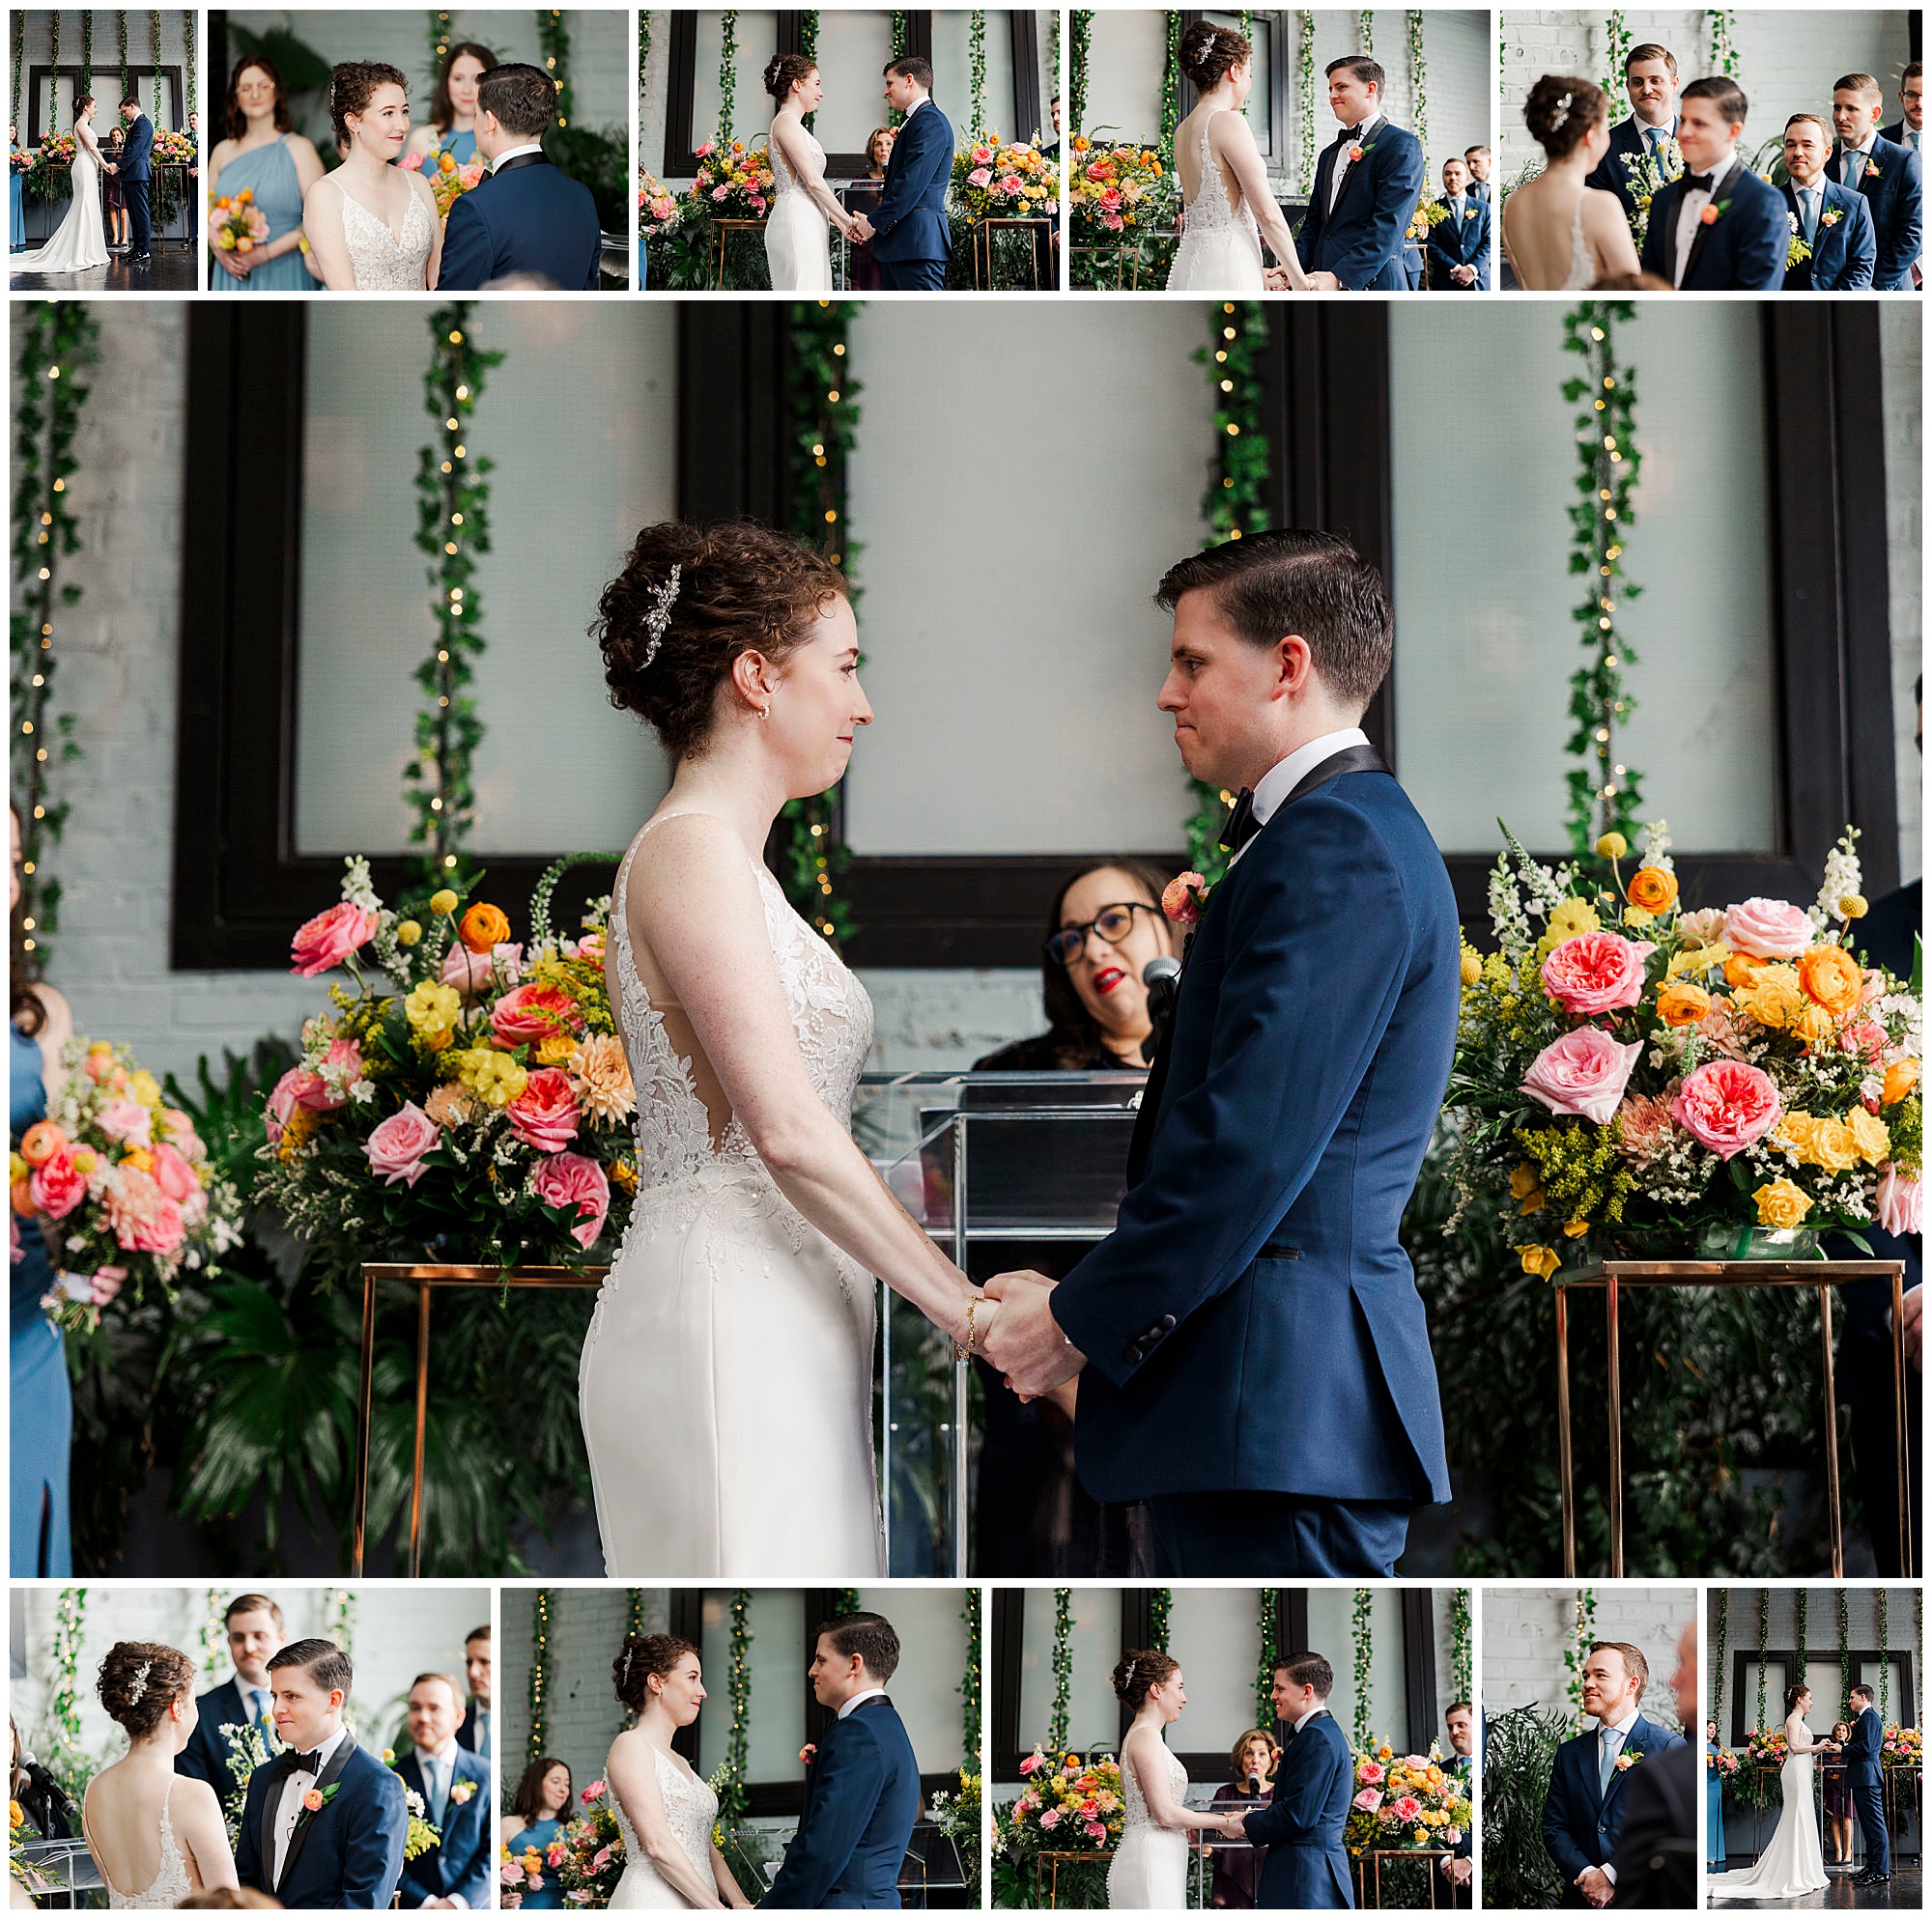 Stunning wedding photos at royal palms shuffleboard in brooklyn